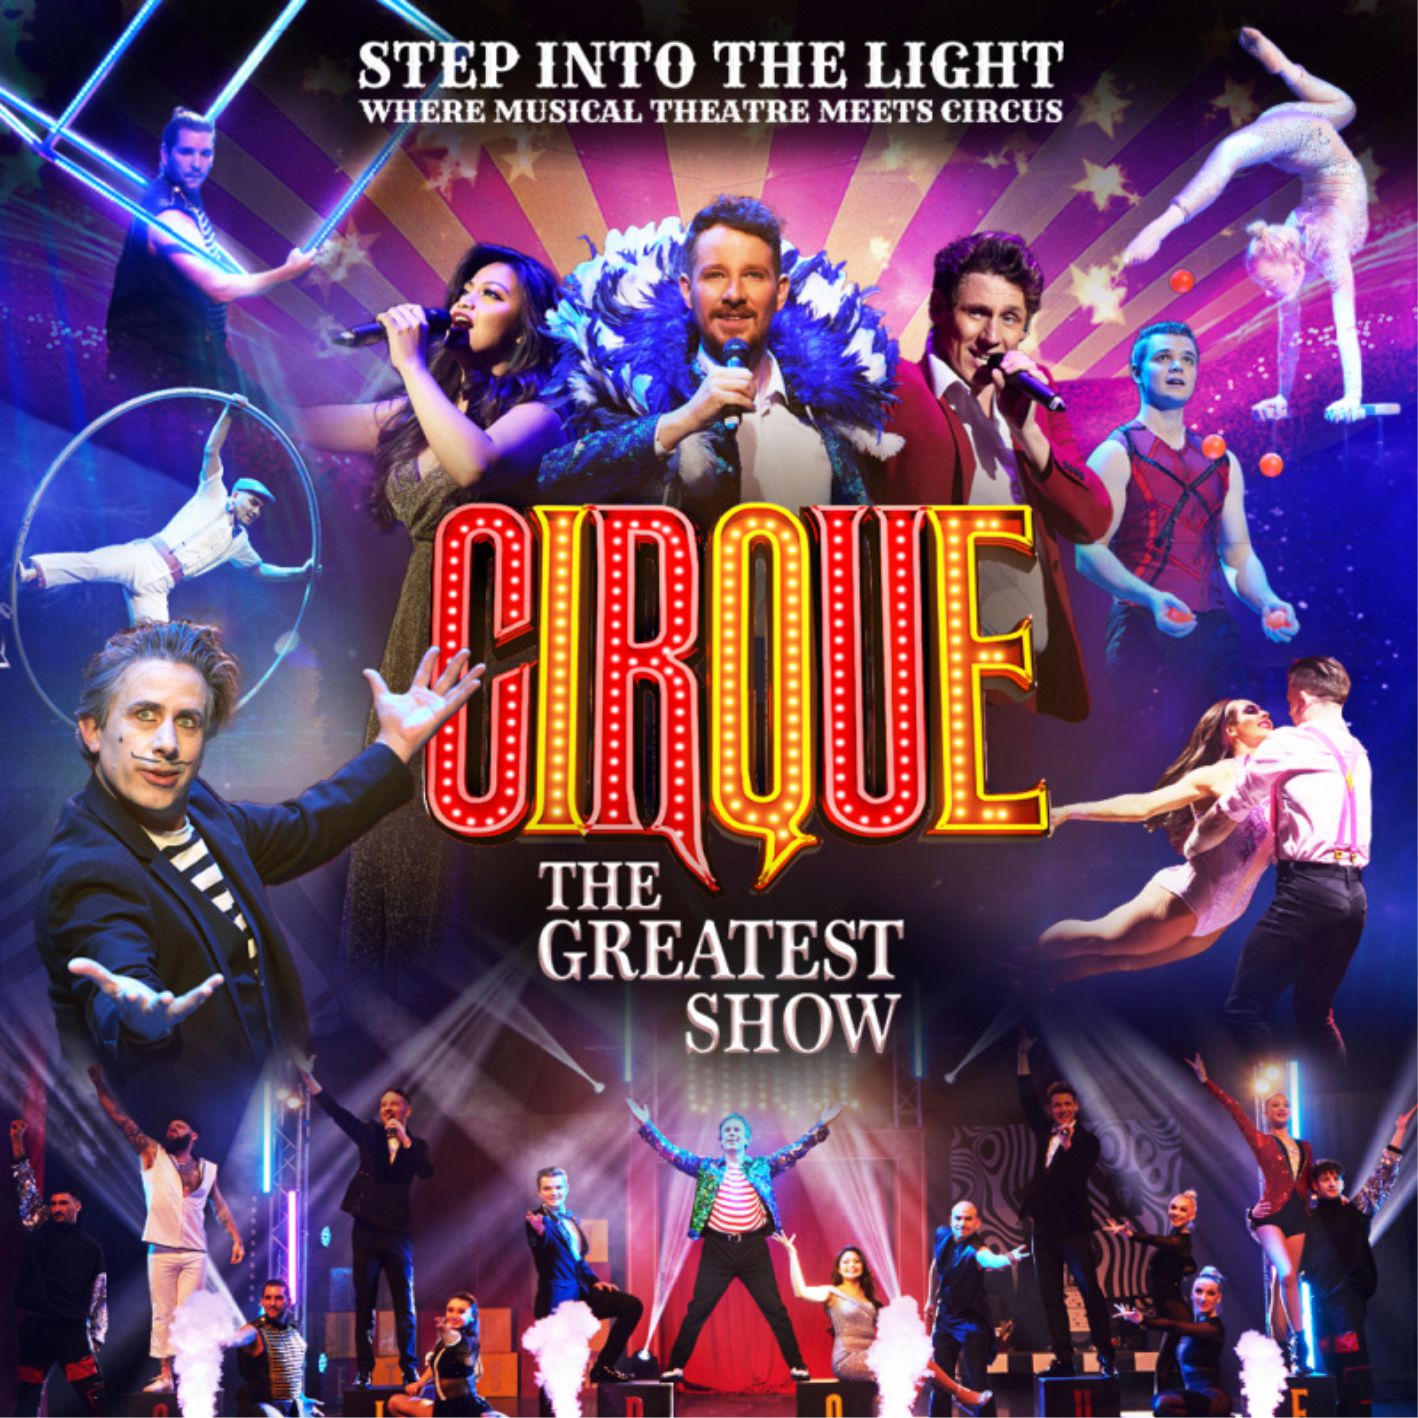 Cirque: The Greatest Show - evening